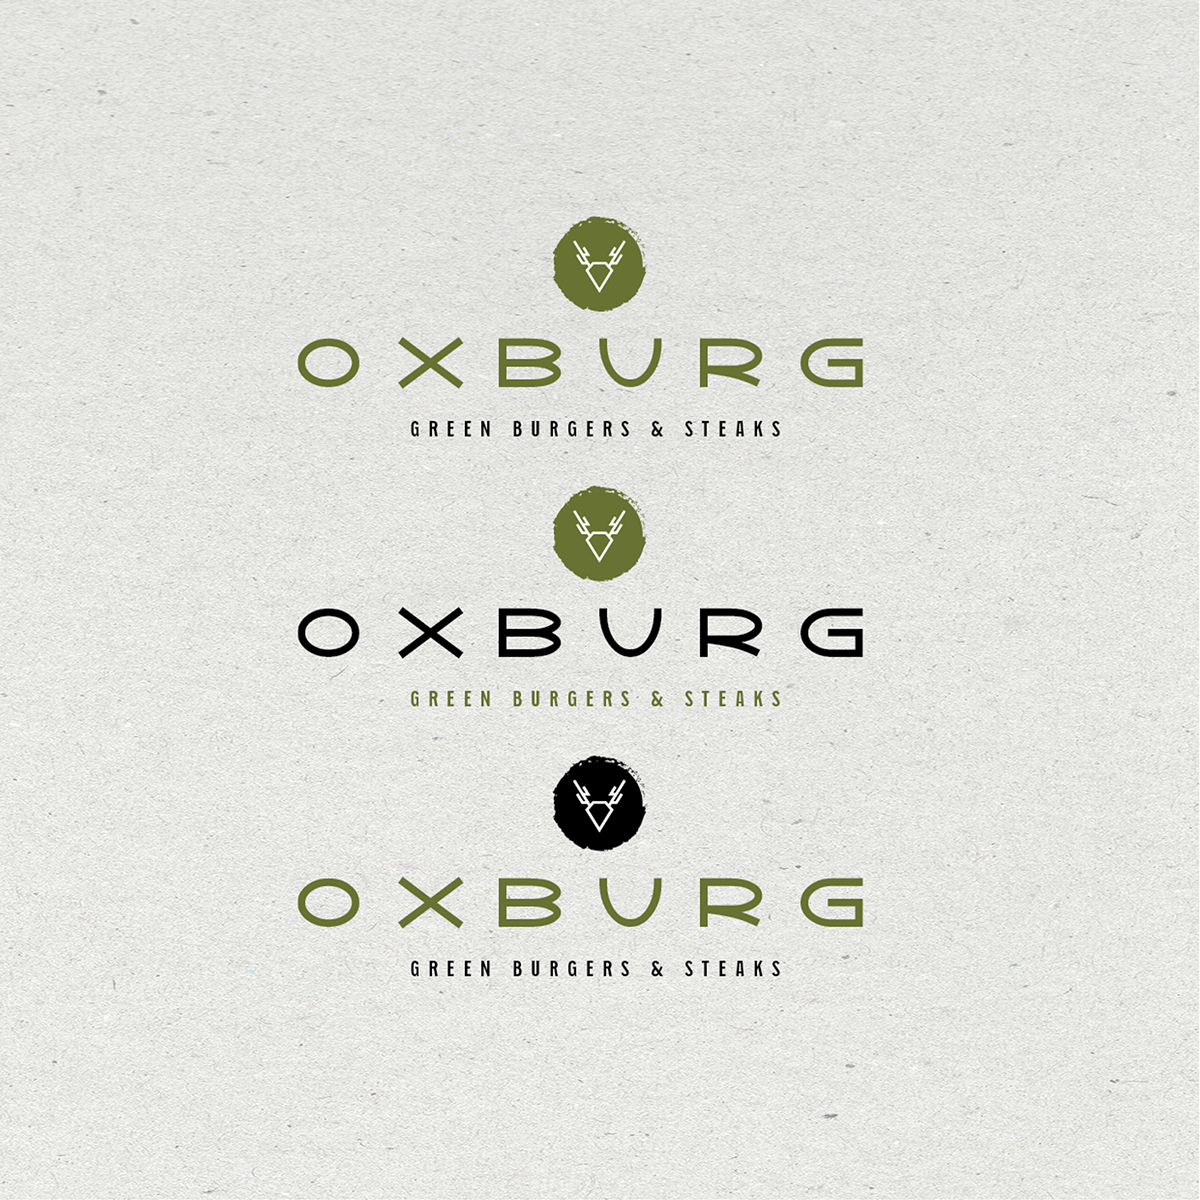 Oxburg burgers